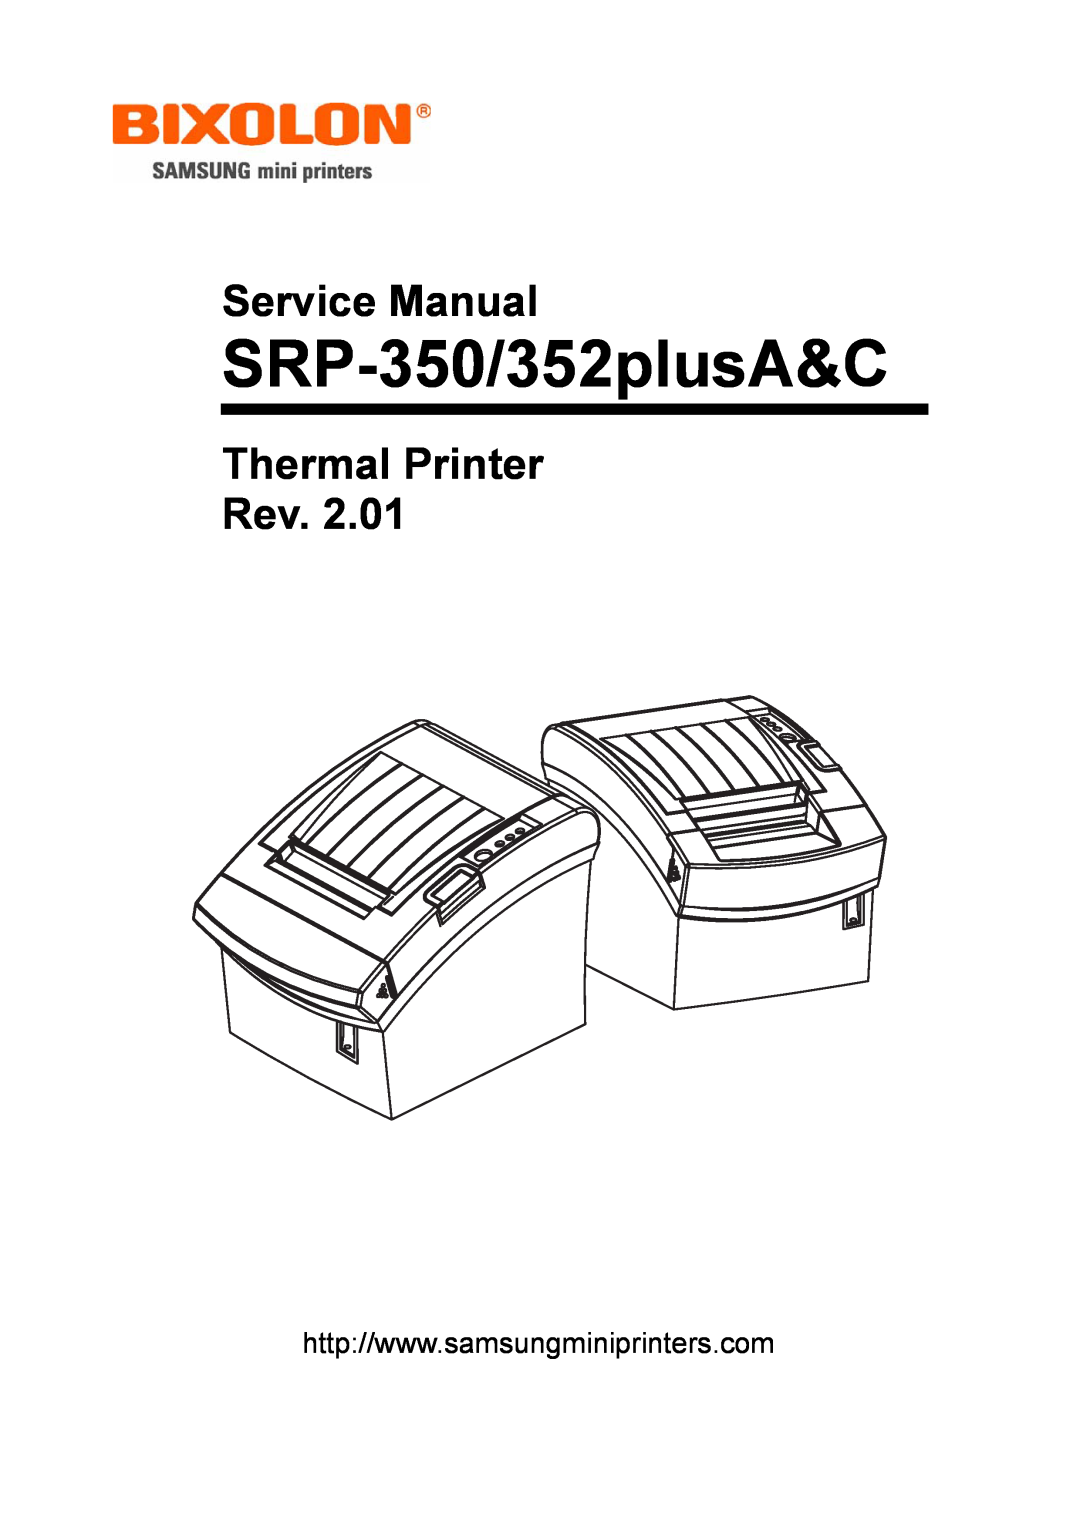 BIXOLON service manual SRP-350/352plusA&C, Service Manual, Thermal Printer Rev 